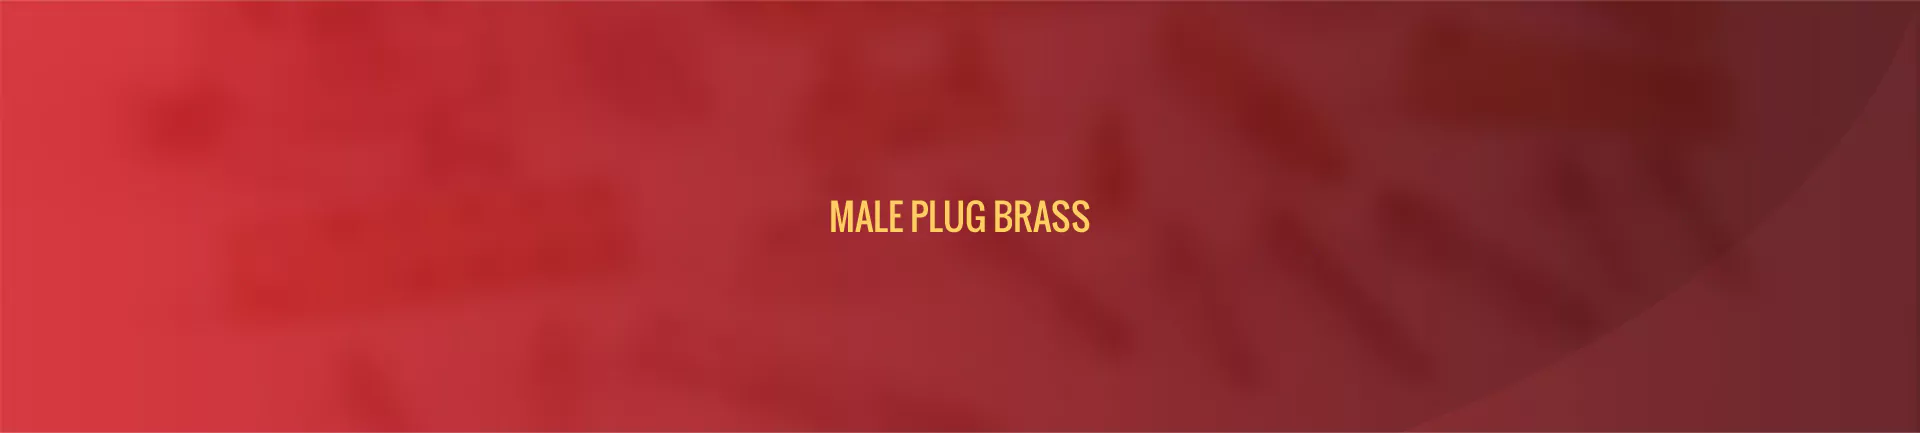 male_plug_brass-banner